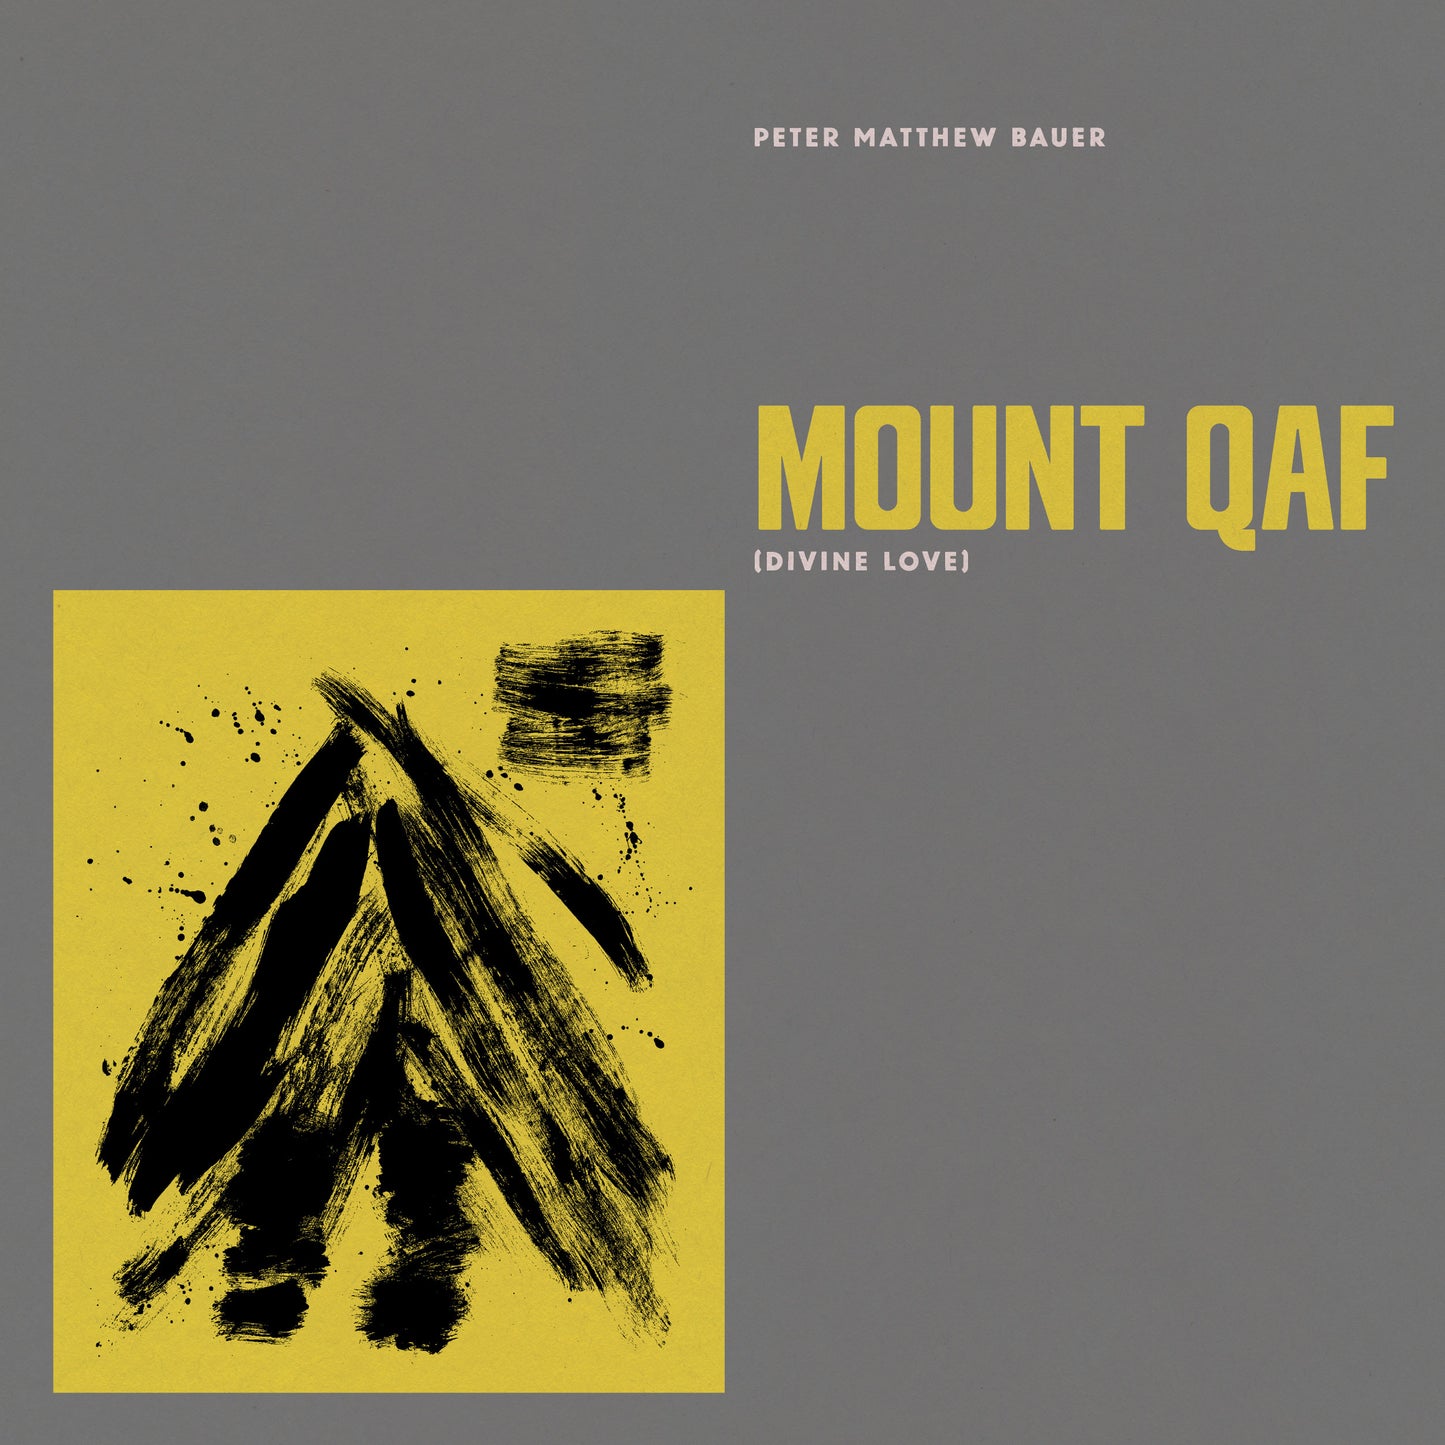 Peter Matthew Bauer "Flowers" & "Mount Qaf" Special